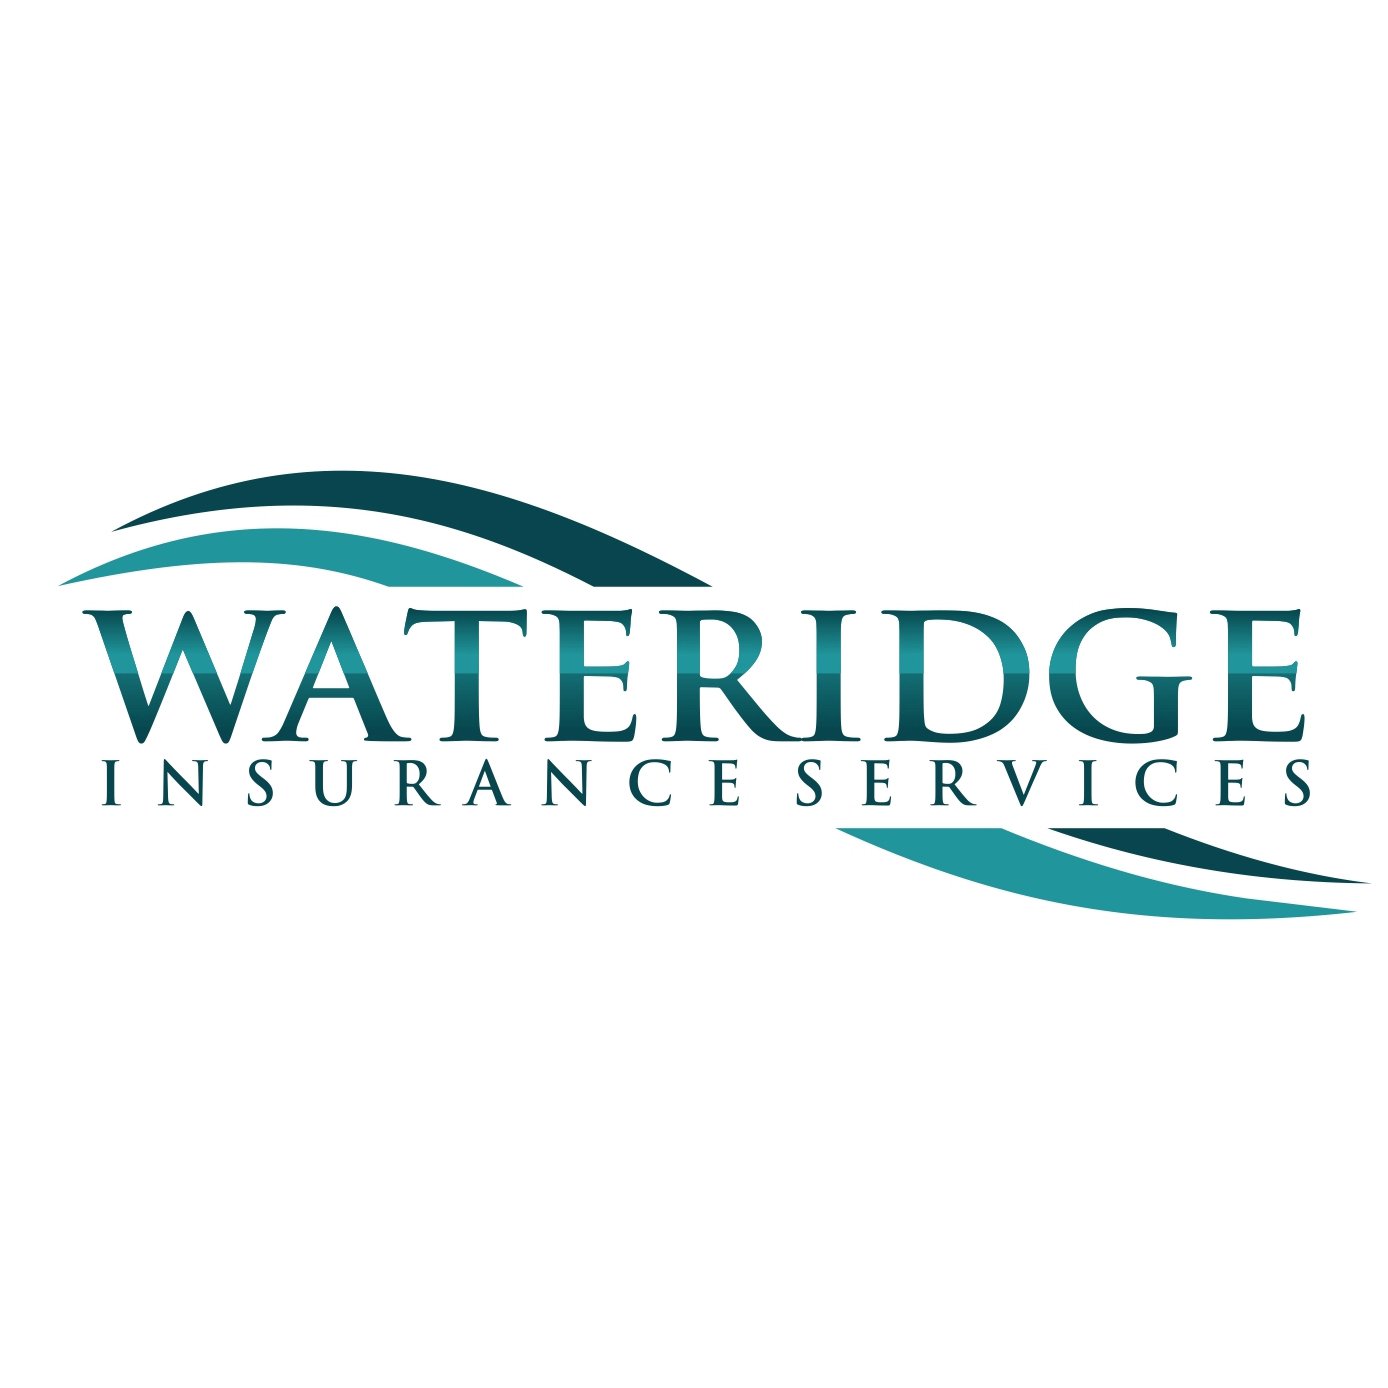 Wateridge Insurance Services Logo